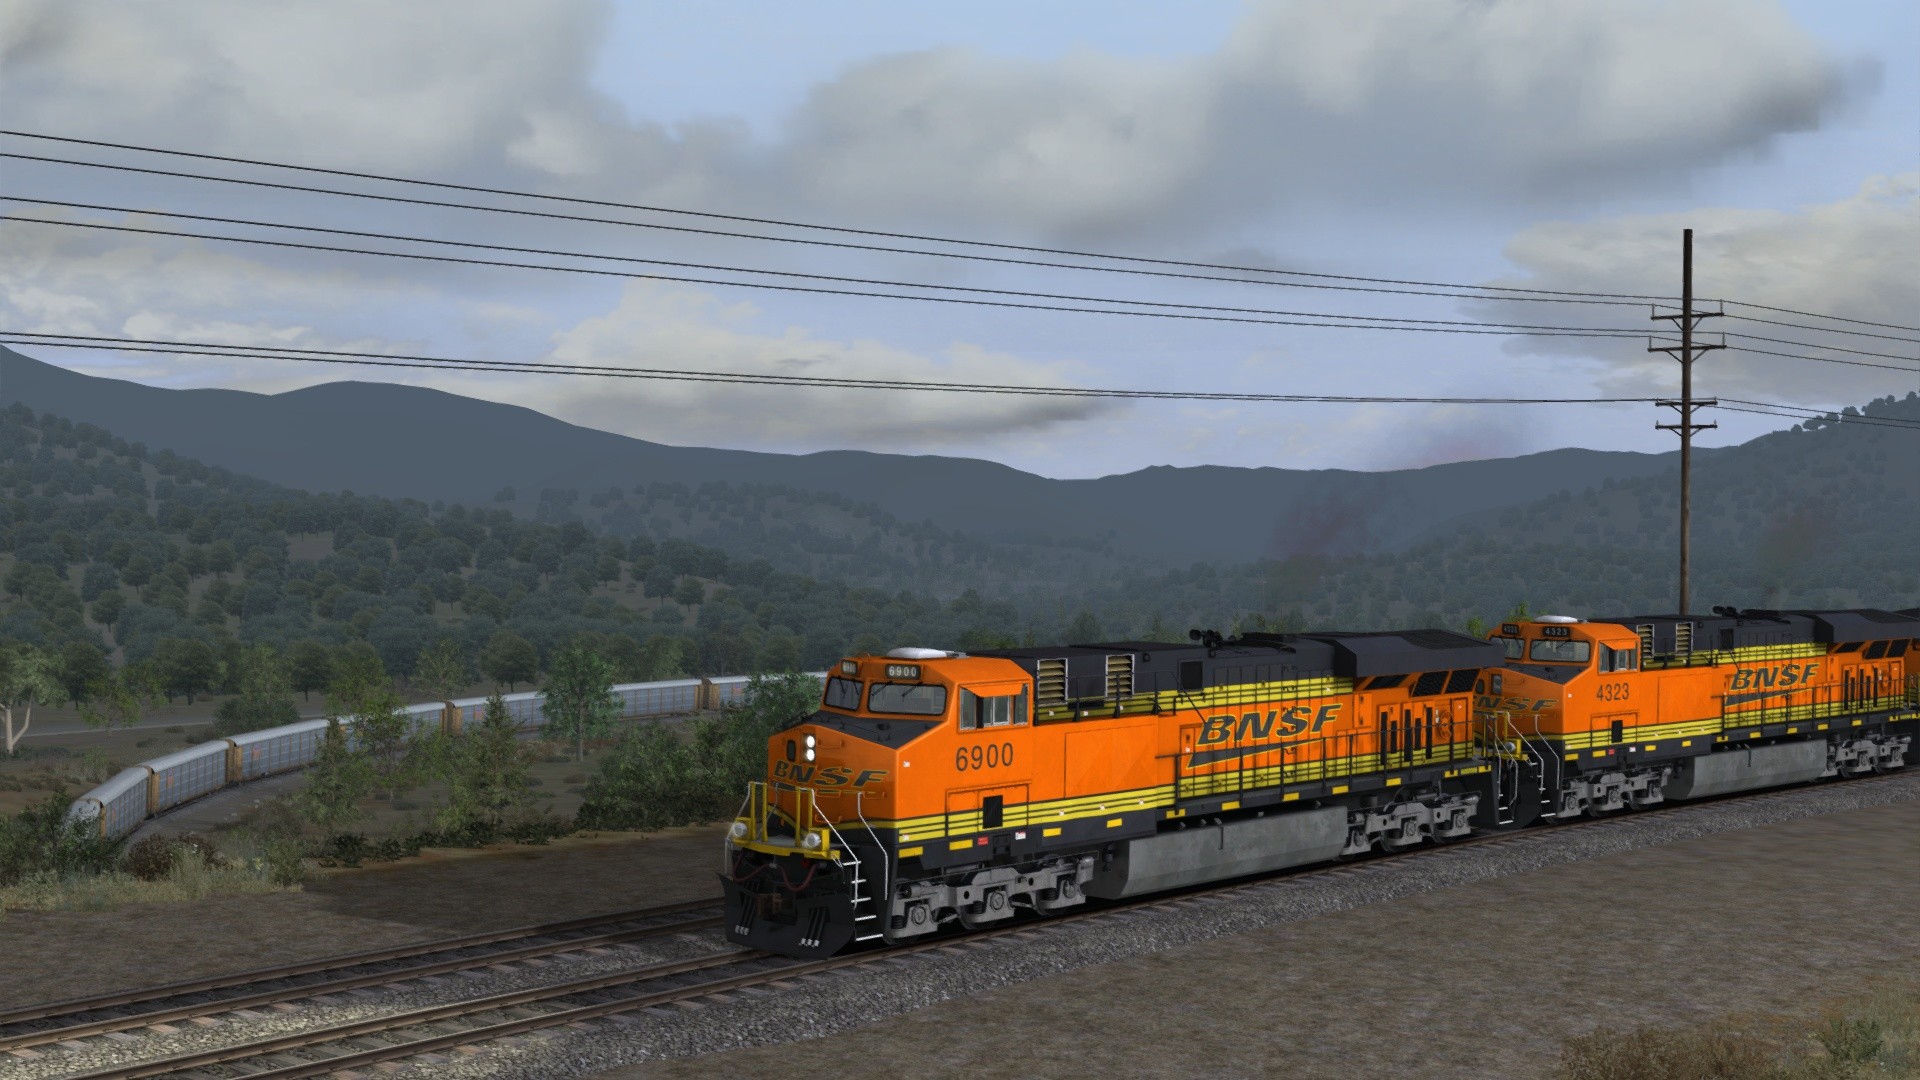 Tehachapi Pass Route Train Simulator